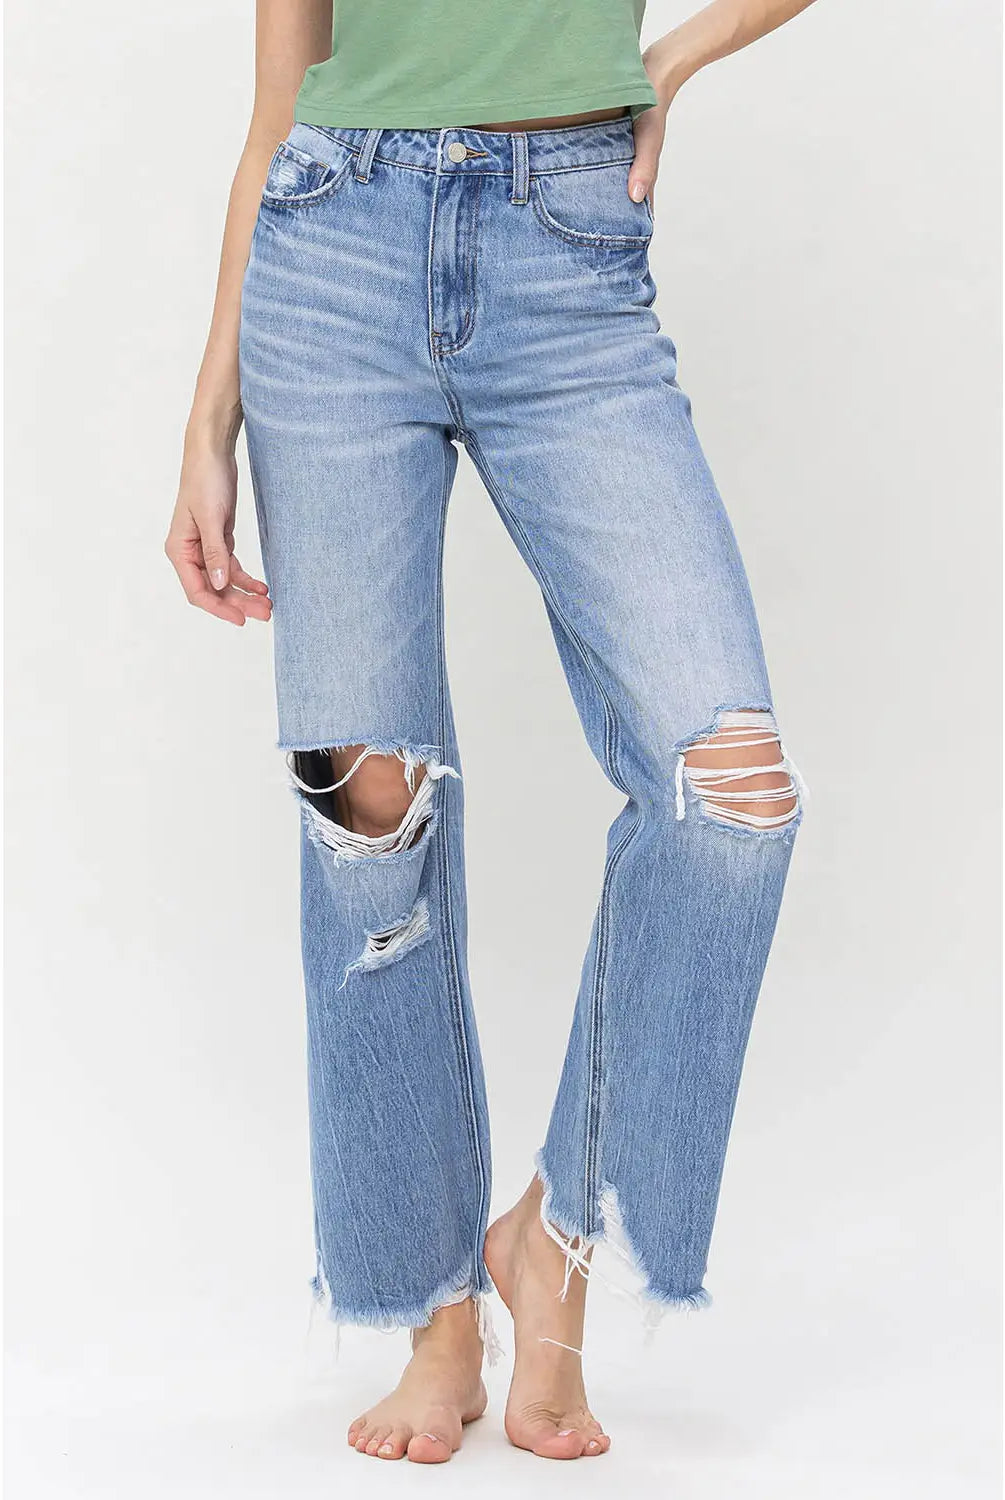 90's Vintage High Rise Redeem Crop Jeans-Jeans-Deadwood South Boutique & Company-Deadwood South Boutique, Women's Fashion Boutique in Henderson, TX